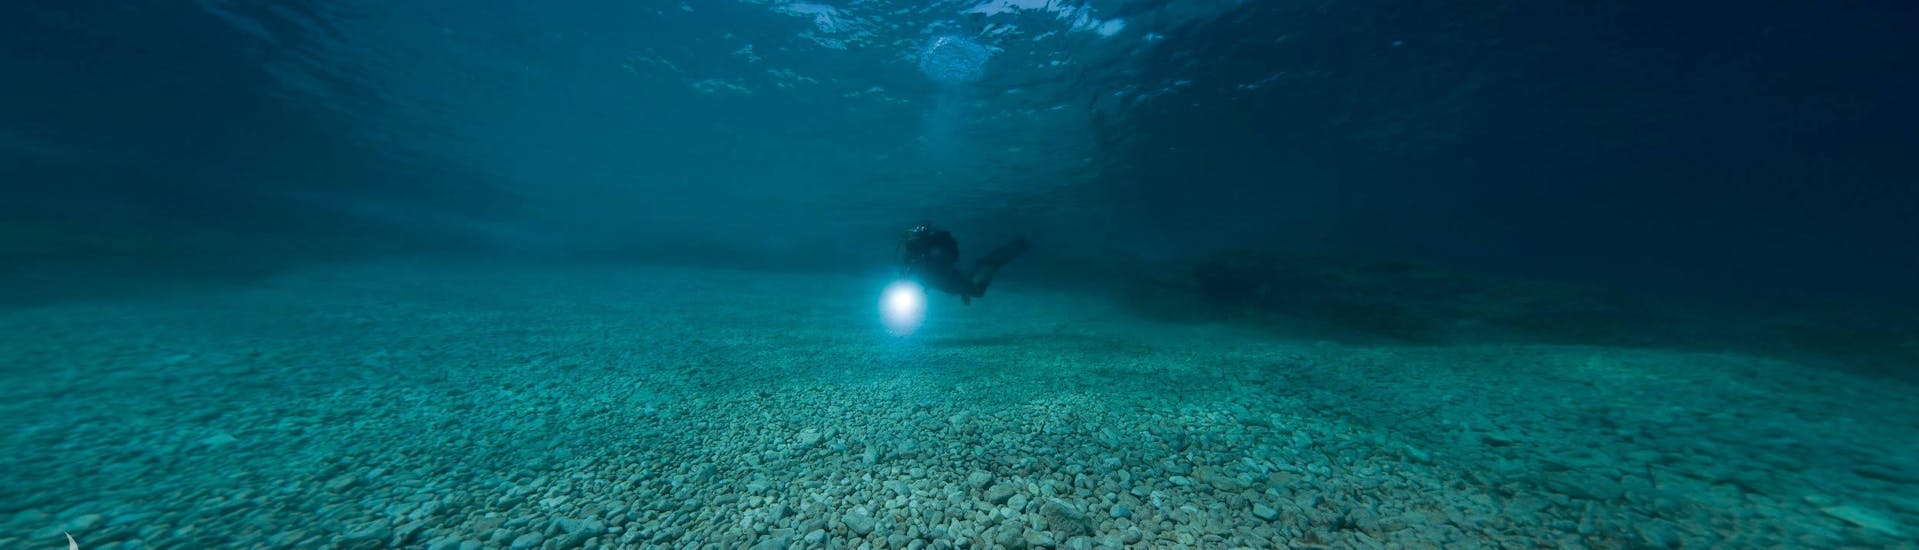 A diver from the diving school Sub Sea Son during his dive in the sea in Mali Lošinnj in Croatia.